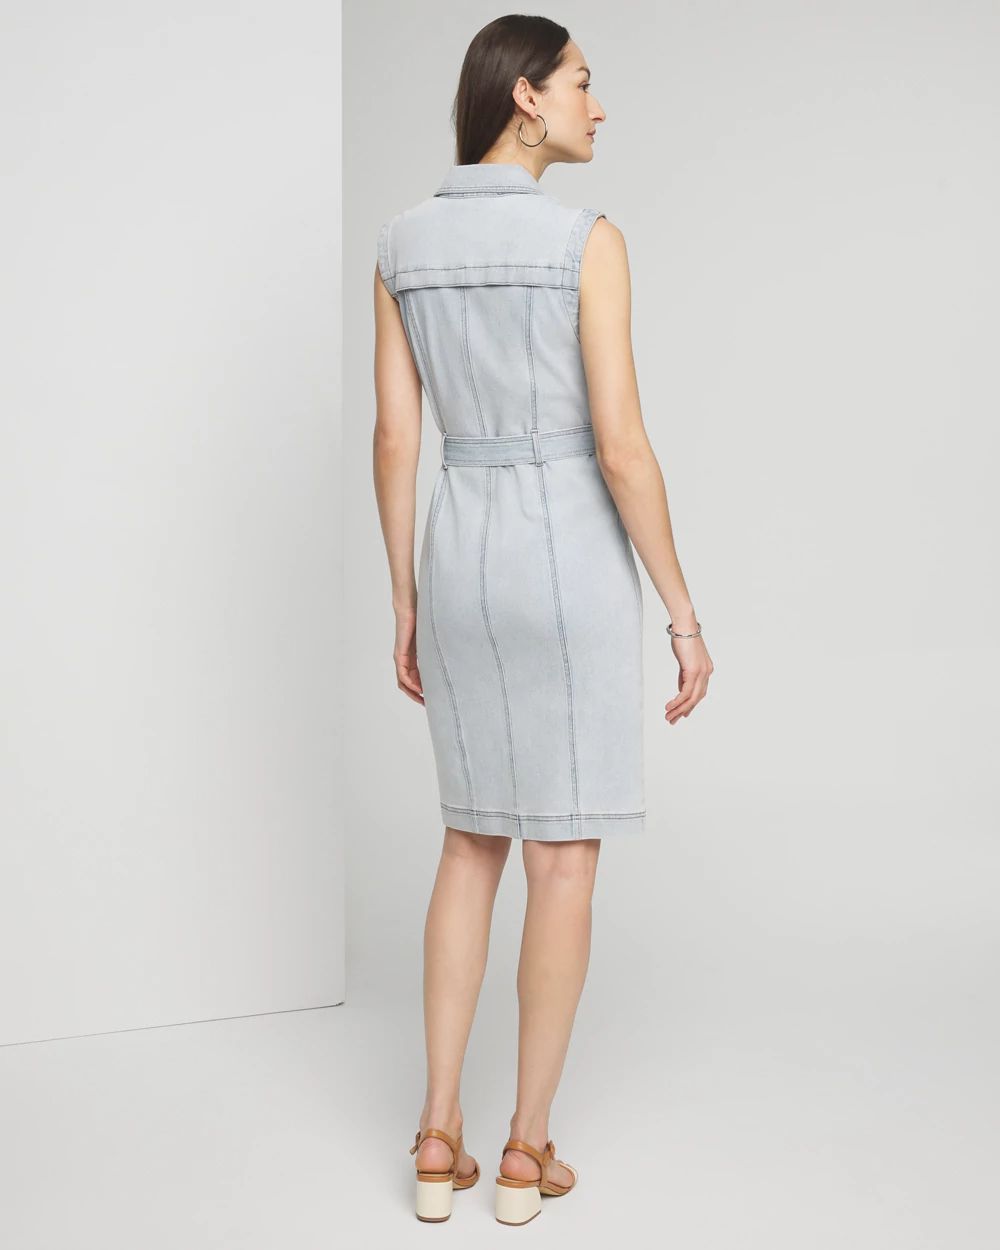 Petite Short Sleeve Denim Sheath Dress click to view larger image.